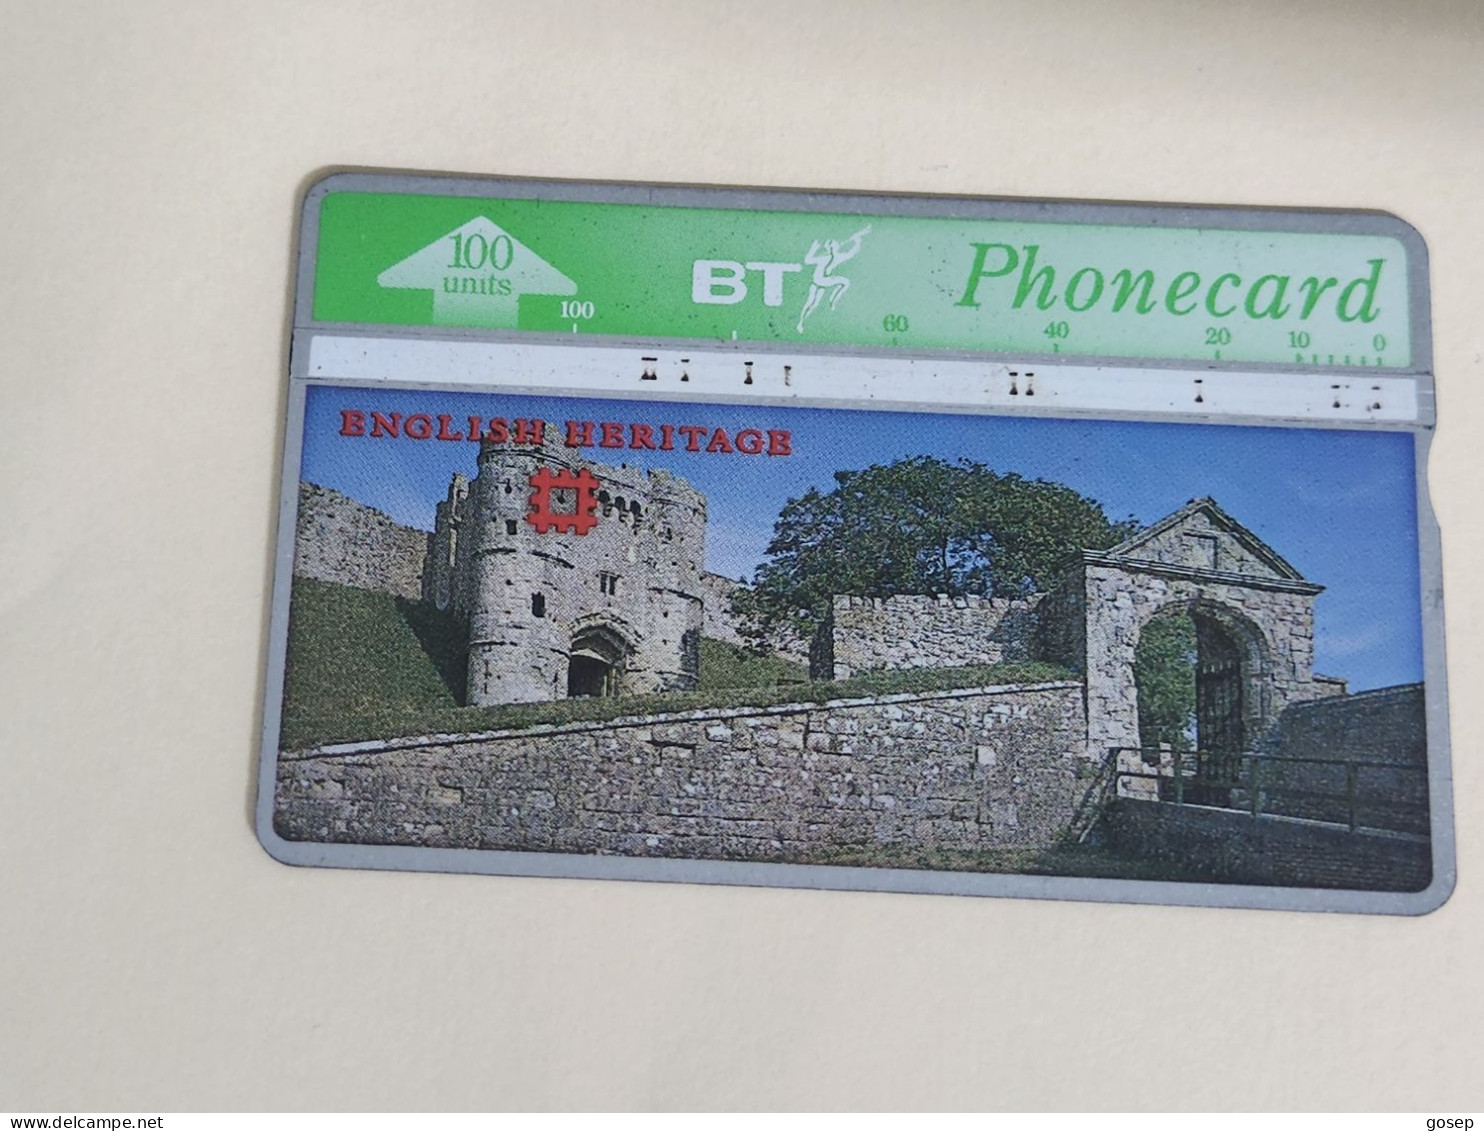 United Kingdom-(BTA115)HERITAGE-Carisbrooke Castle-(197)(100units)(527H69456)price Cataloge3.00£-used+1card Prepiad Free - BT Emissions Publicitaires